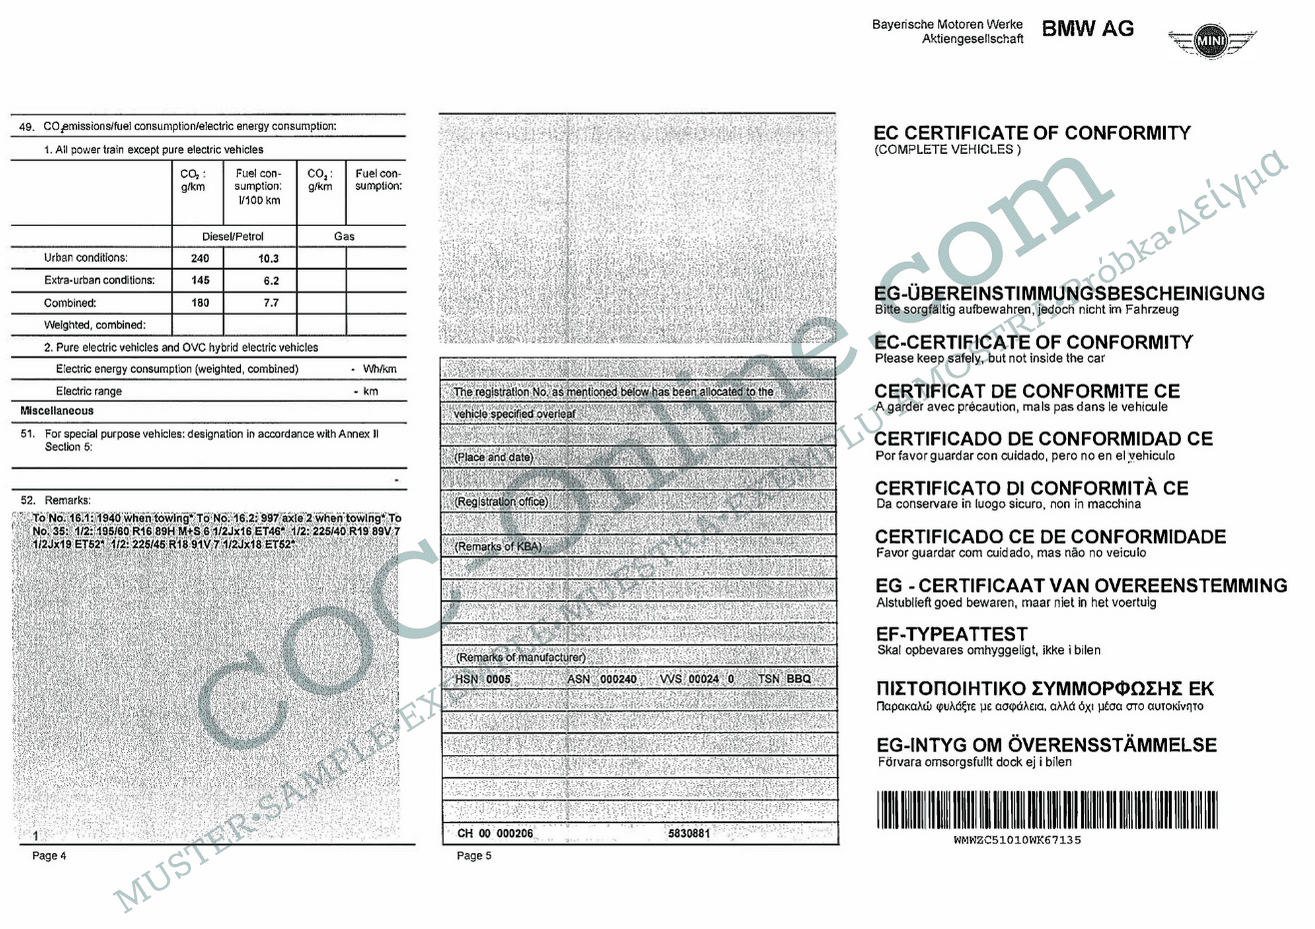 EC Certificate of Conformity MINI